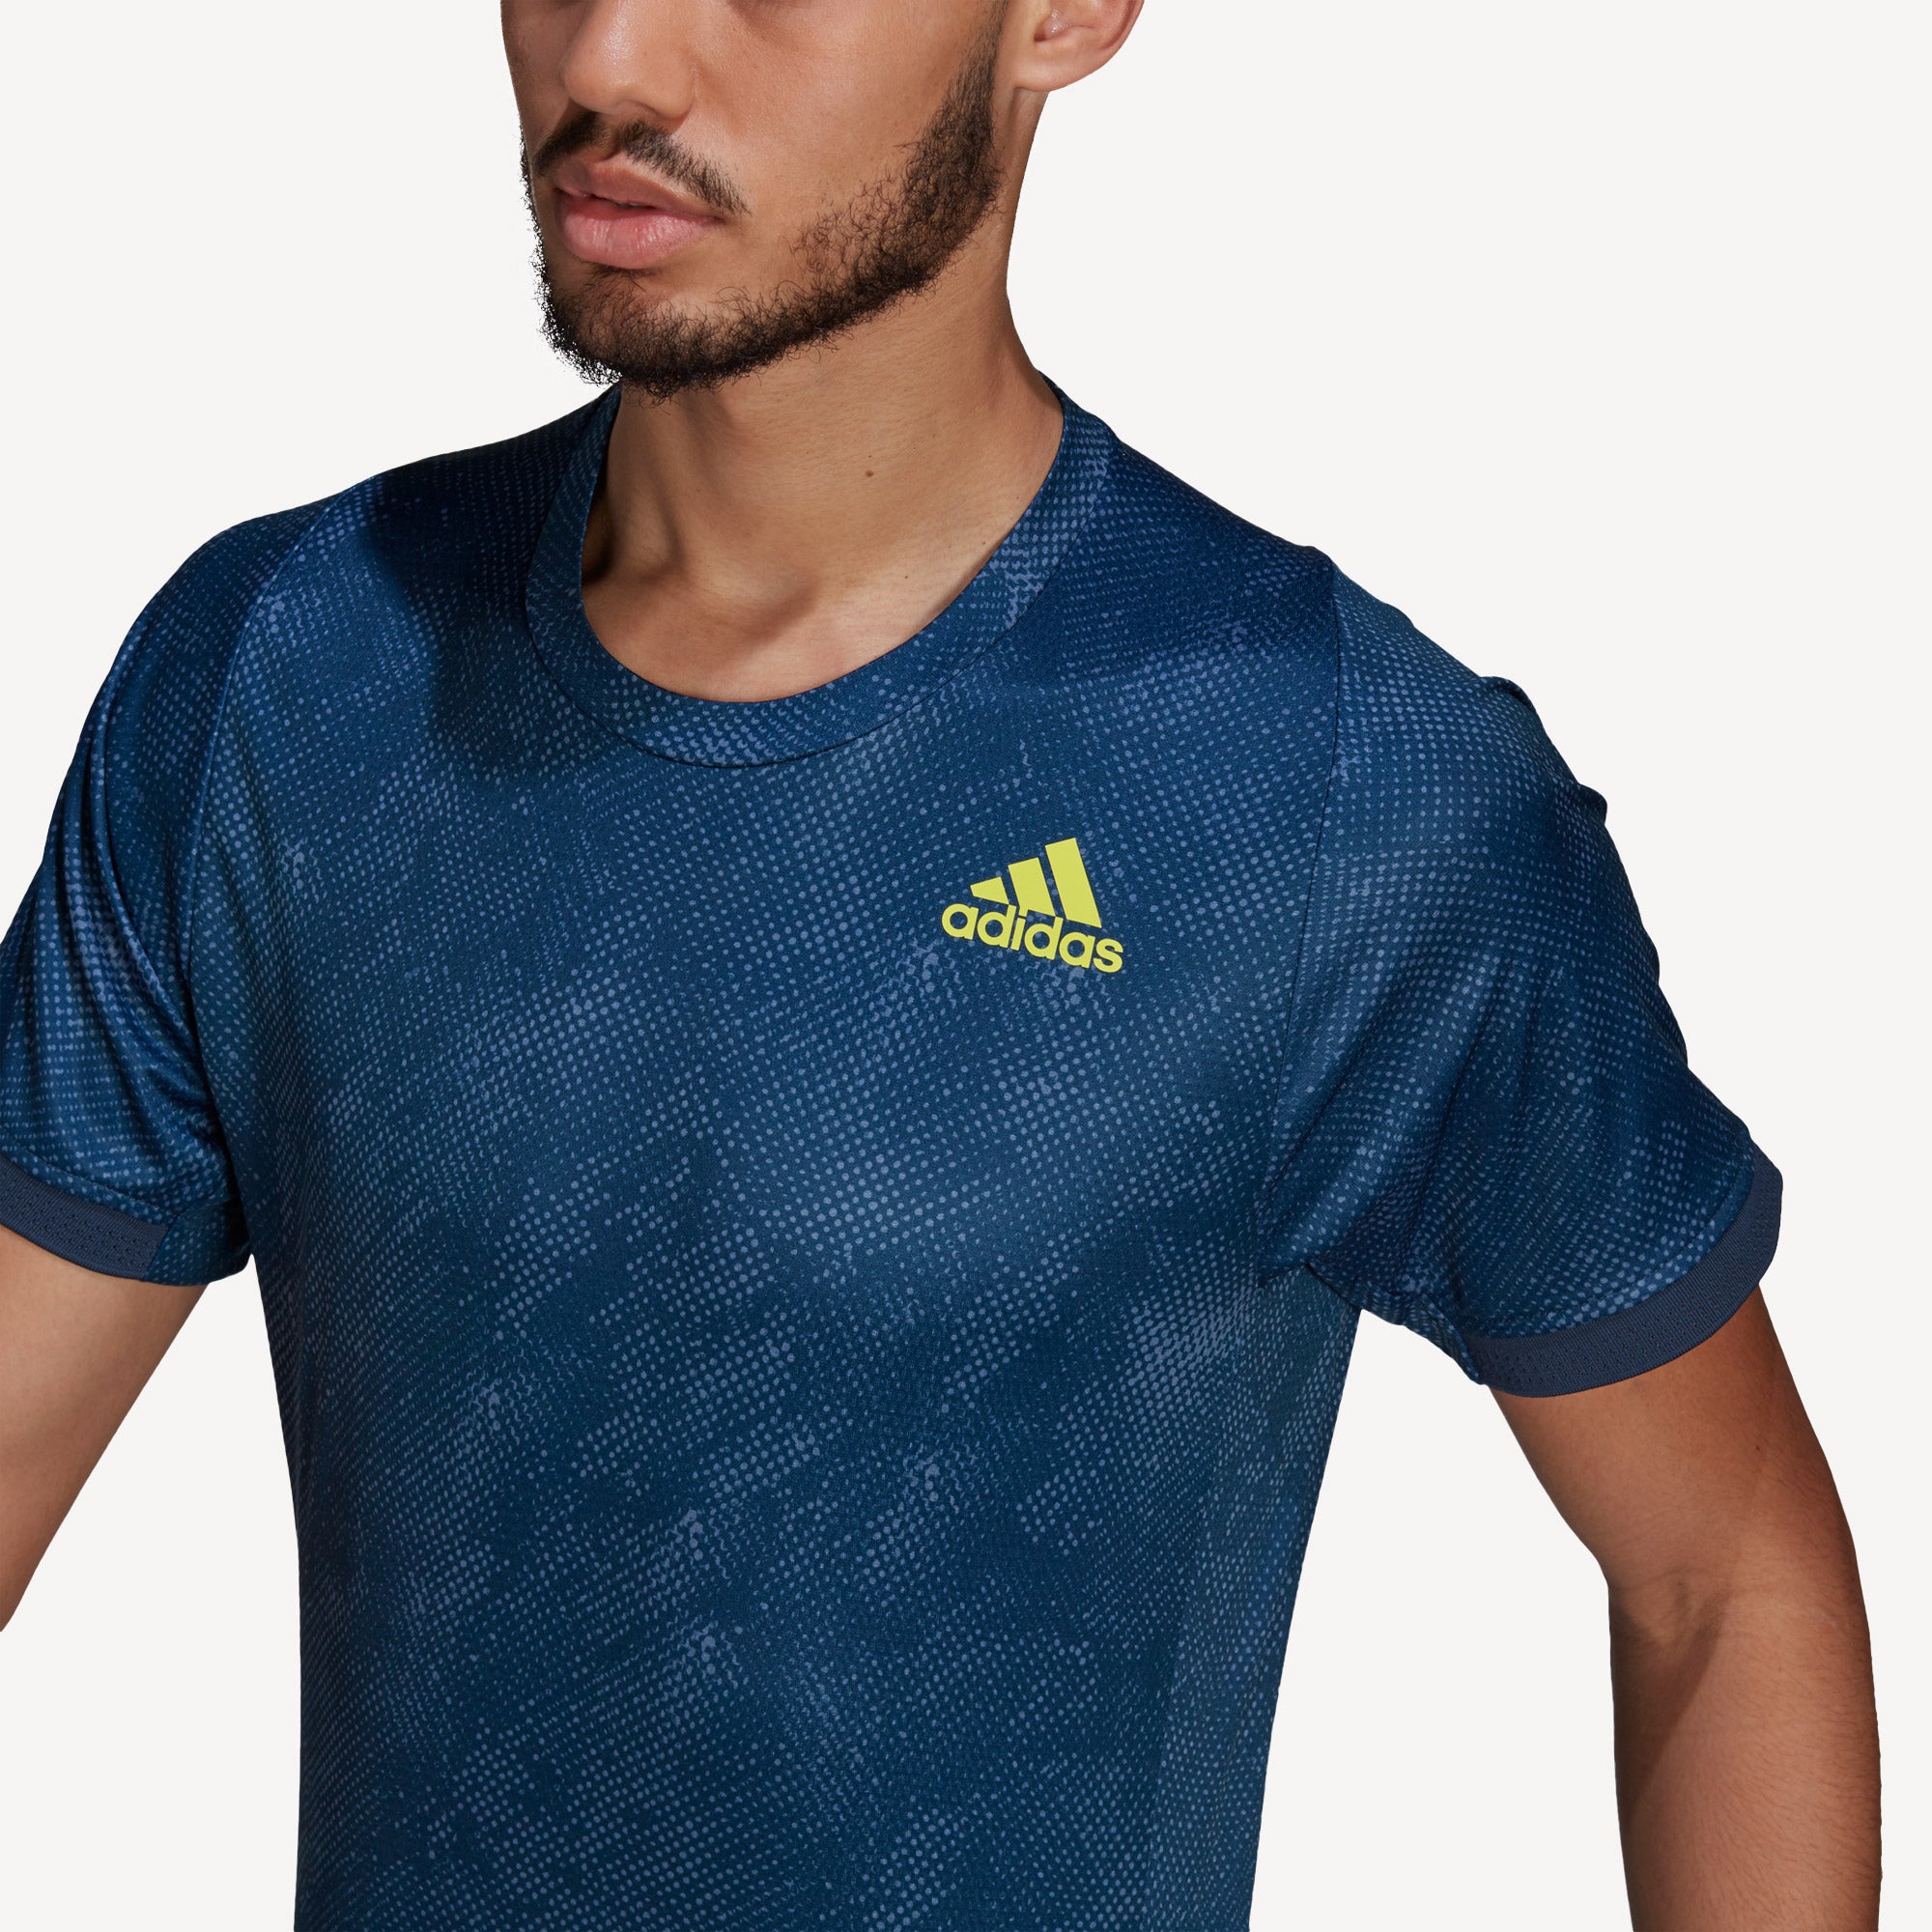 adidas Freelift Primeblue Men's Printed Tennis Shirt Blue (4)